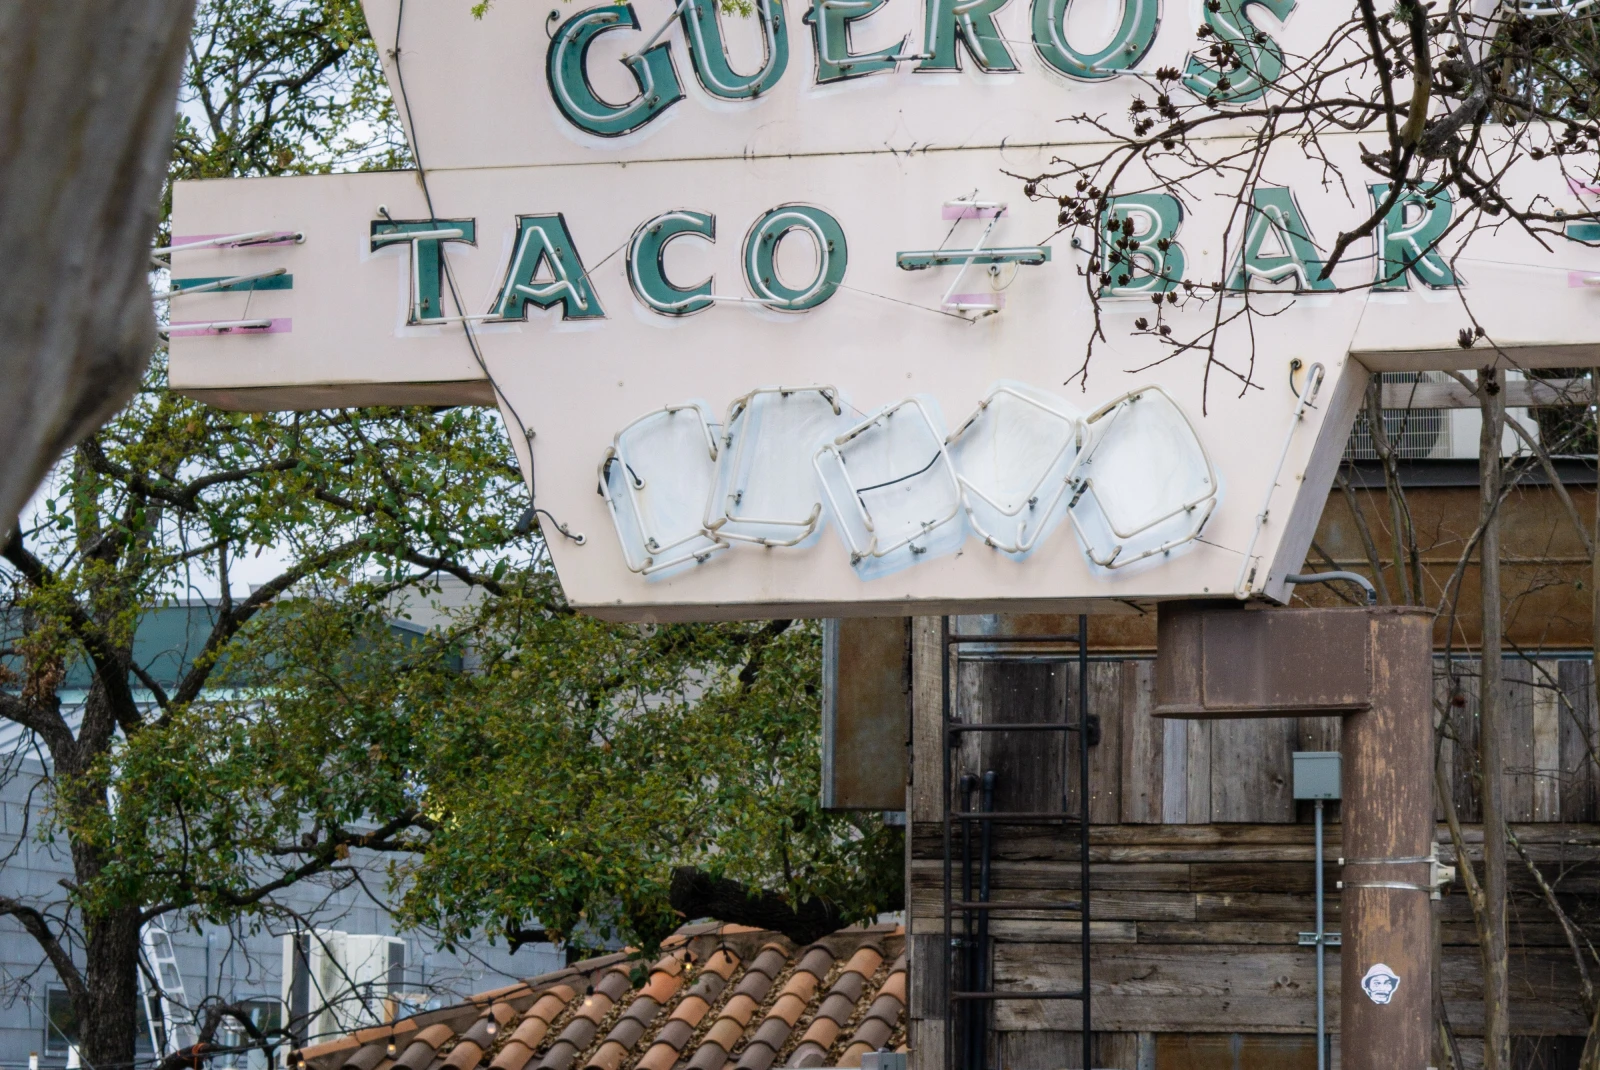 Sign reads "Gueros taco bar" in Austin, TX